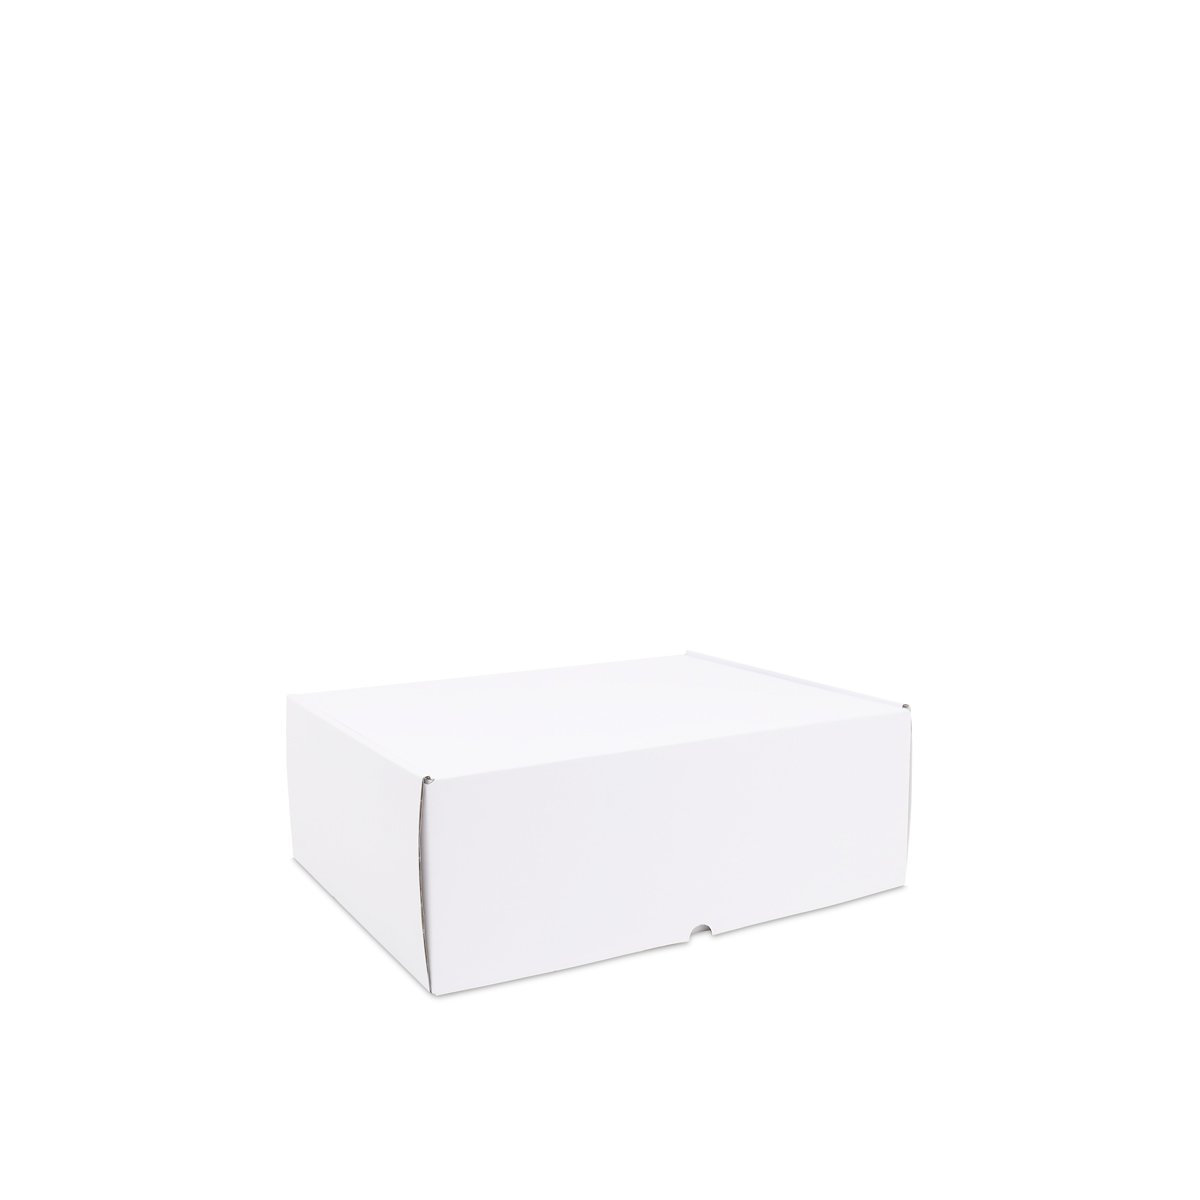 Kartonnen geschenkdozen - Wit/Zwart kleur